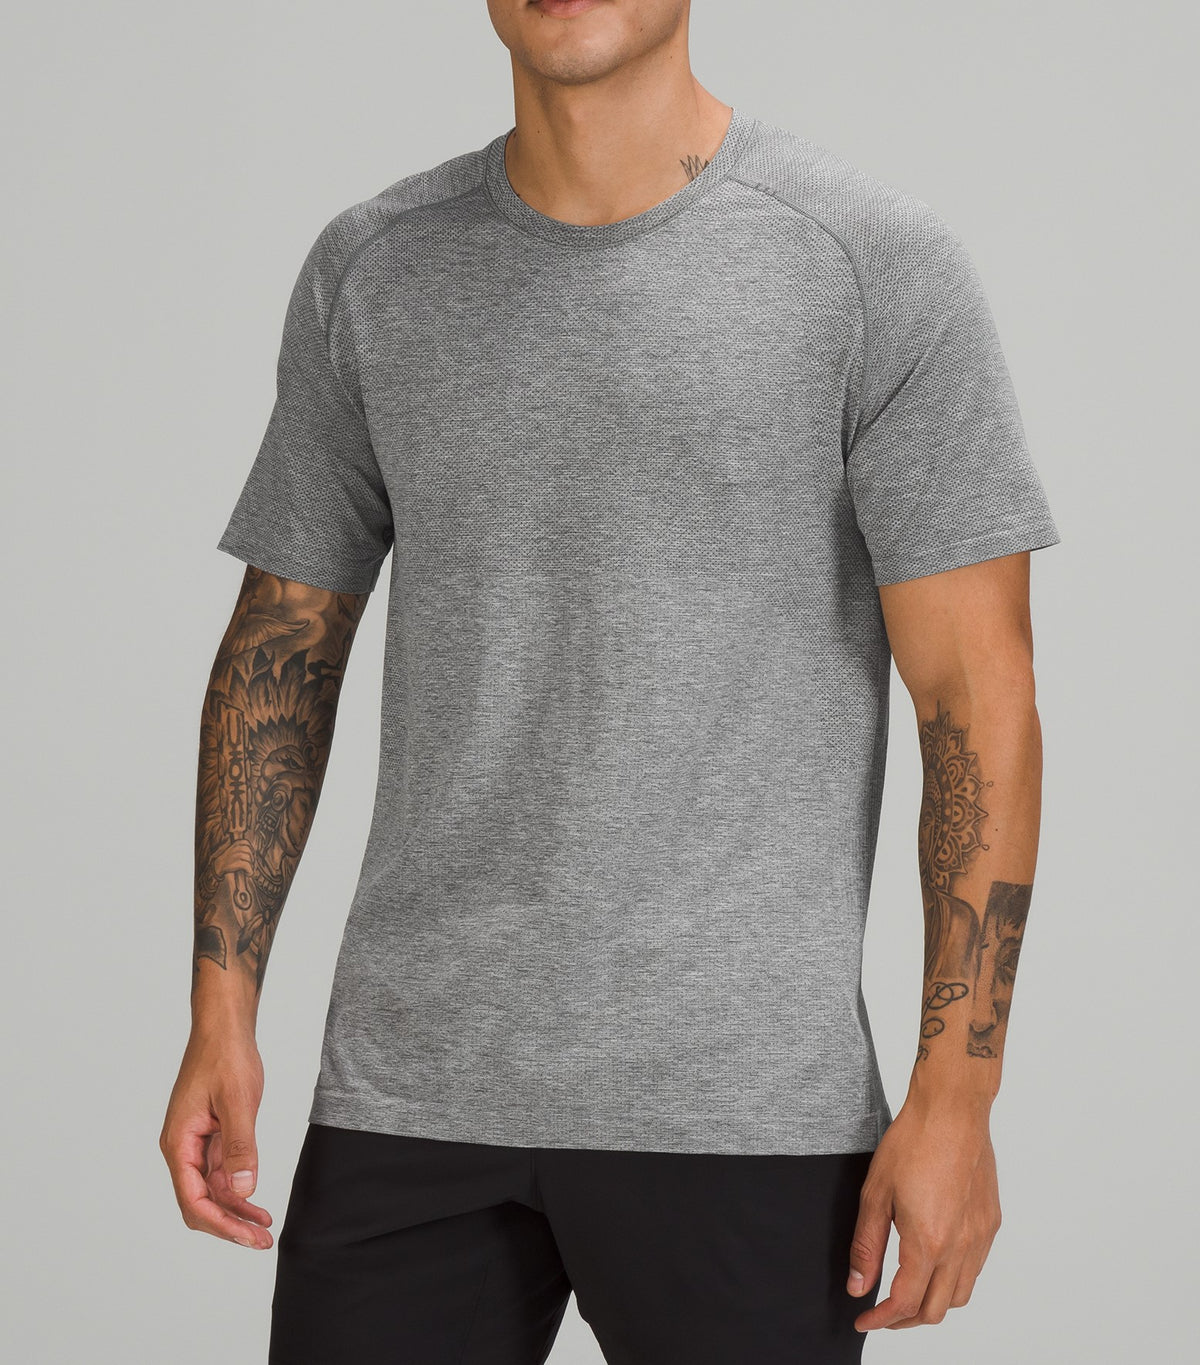 Grey Metal Vent Tech 2.5 long-sleeved top, Lululemon